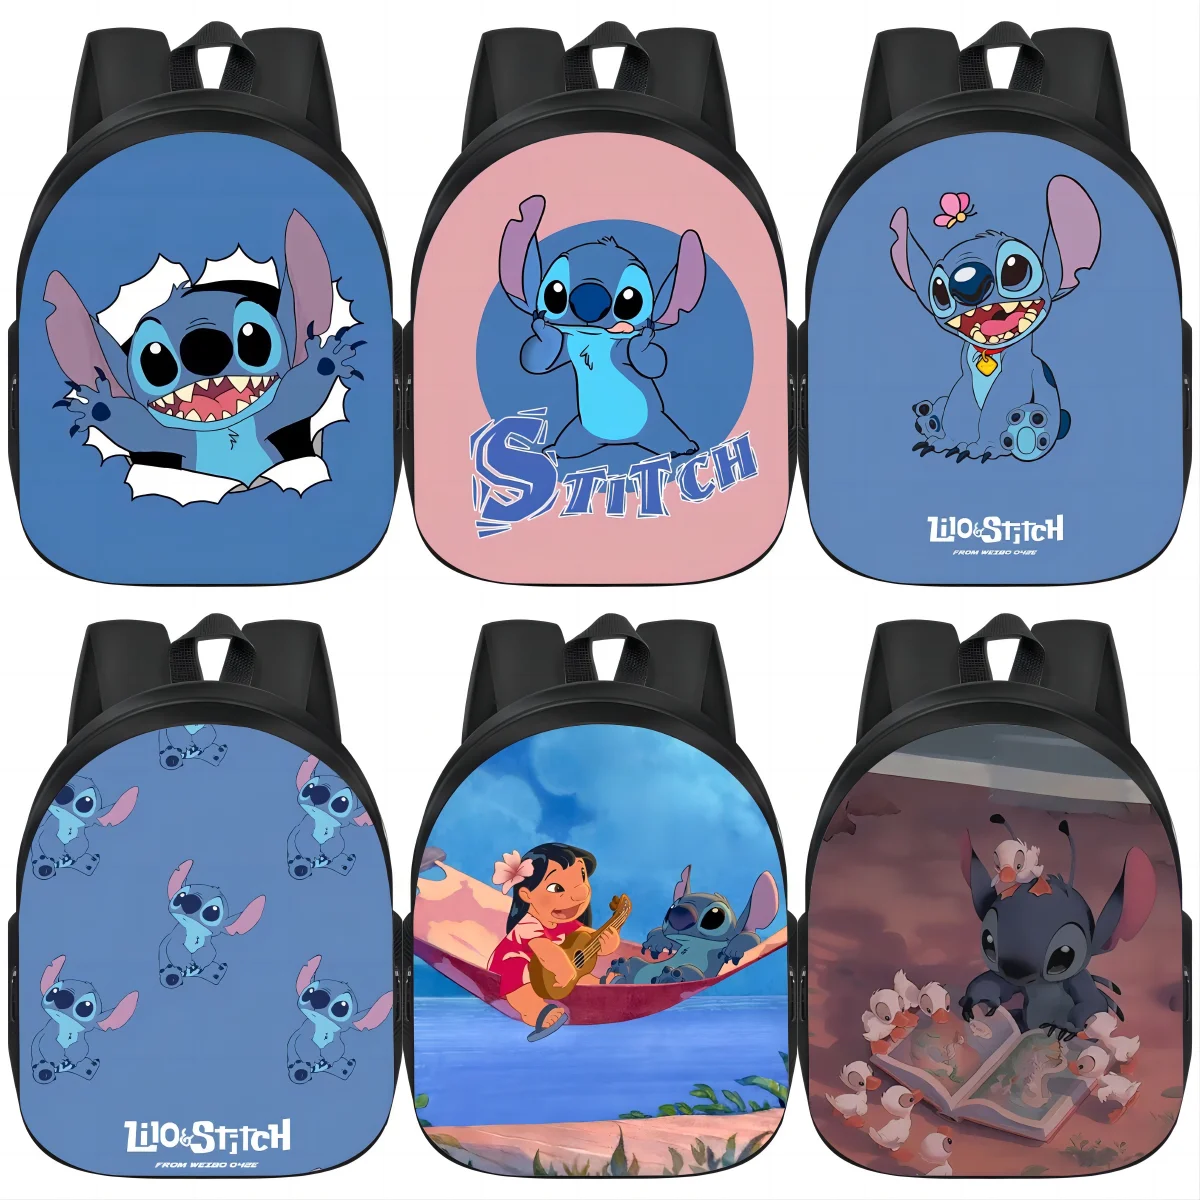 

14 Inch Disney Lilo & Stitch Backpacks for Teenager Girls Boys Students School Bag Backpack Shoulder New Travel Laptop Bags